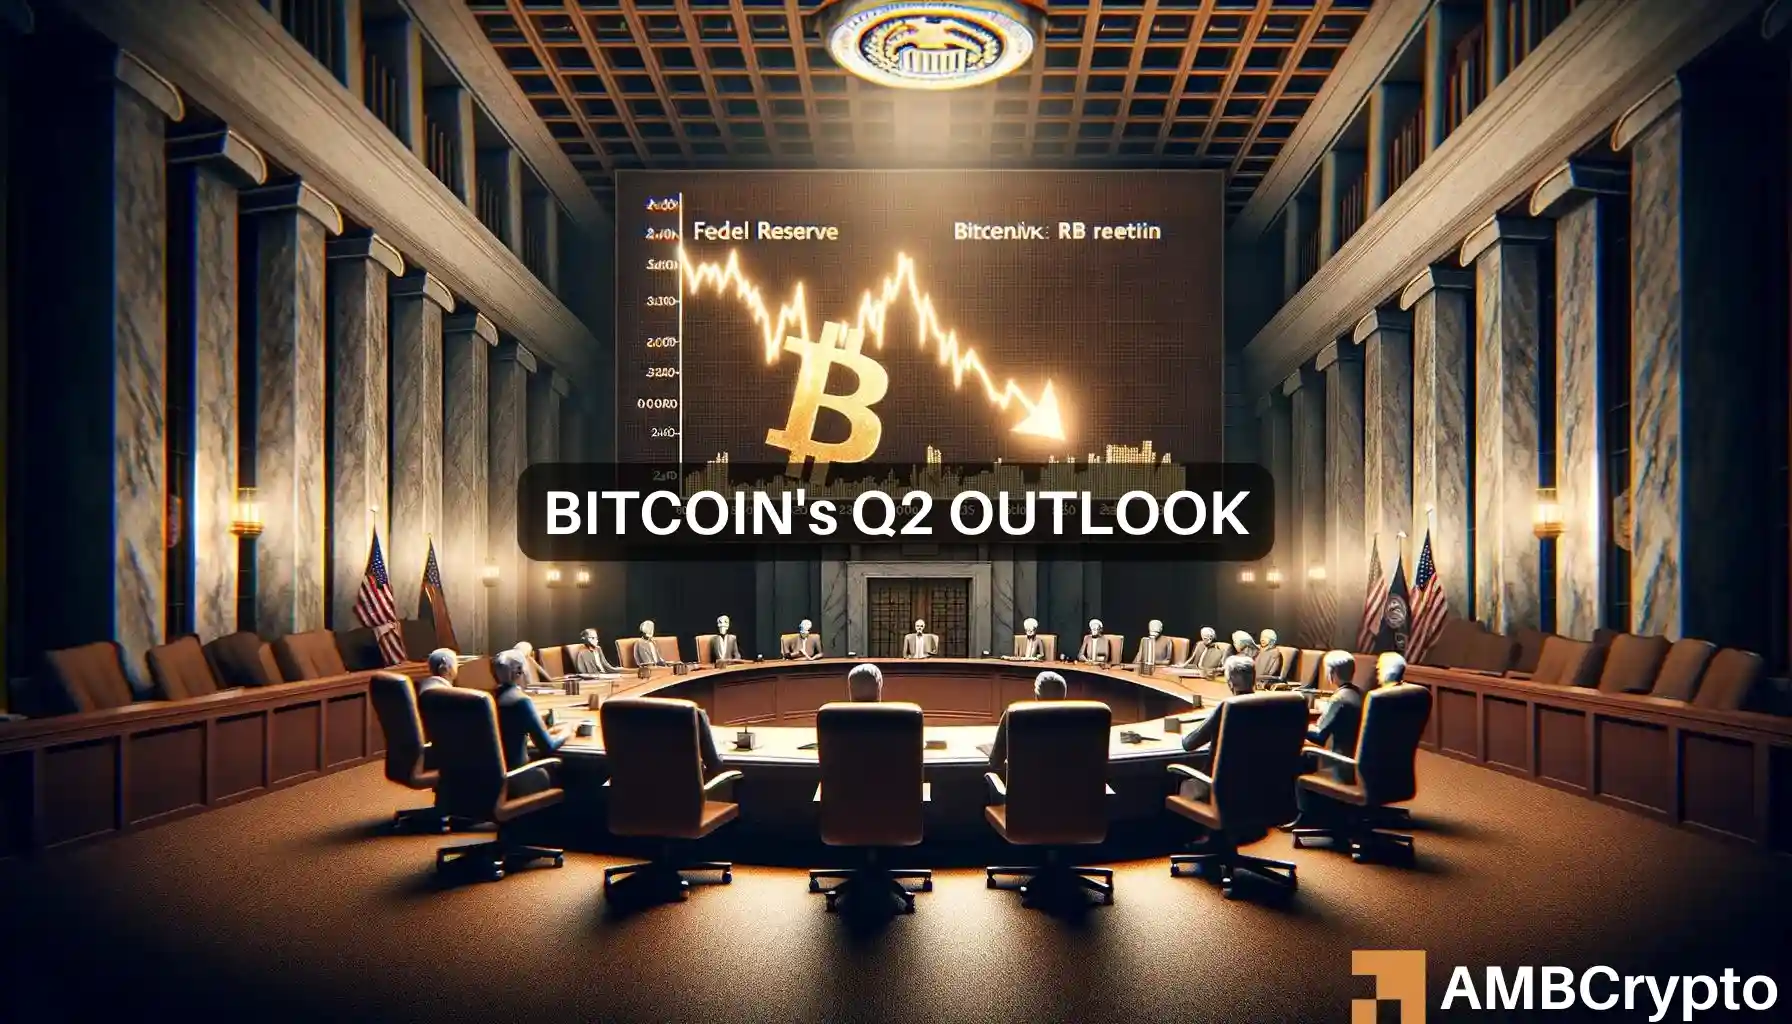 Bitcoin's Q2 outlook